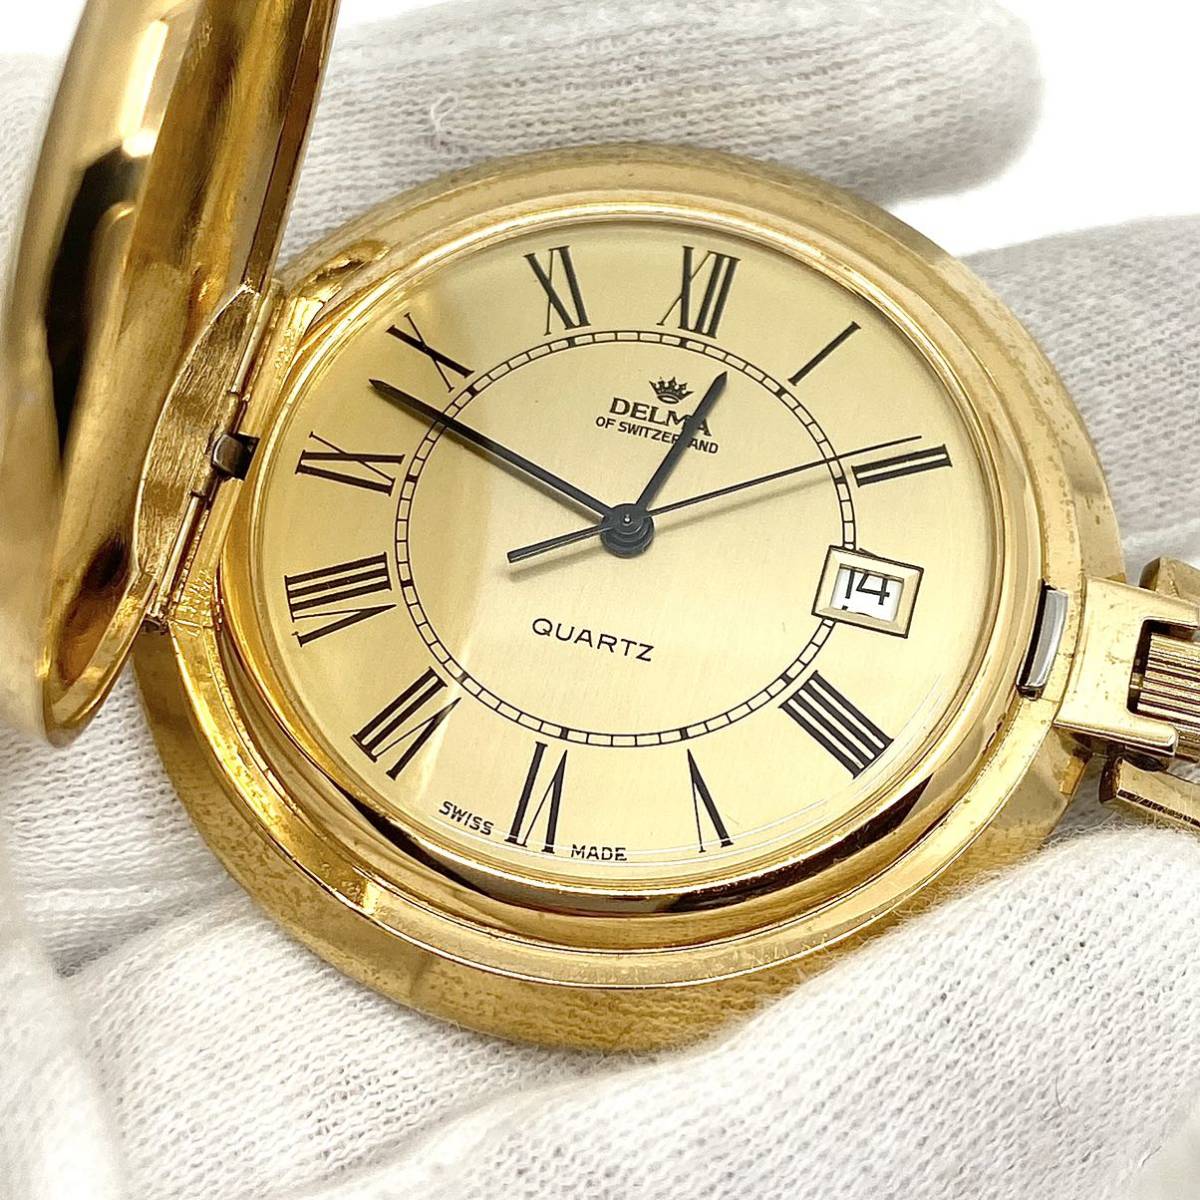 DELMA pocket watch watch Date Rome n 3 hands quartz quartz Gold gold Dell maD132